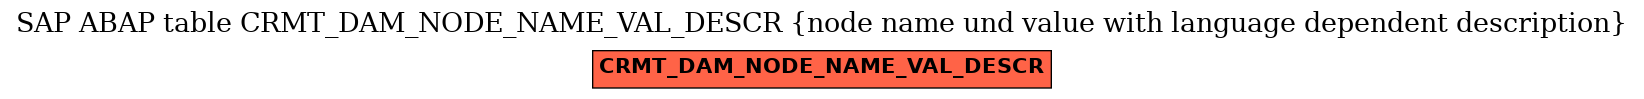 E-R Diagram for table CRMT_DAM_NODE_NAME_VAL_DESCR (node name und value with language dependent description)